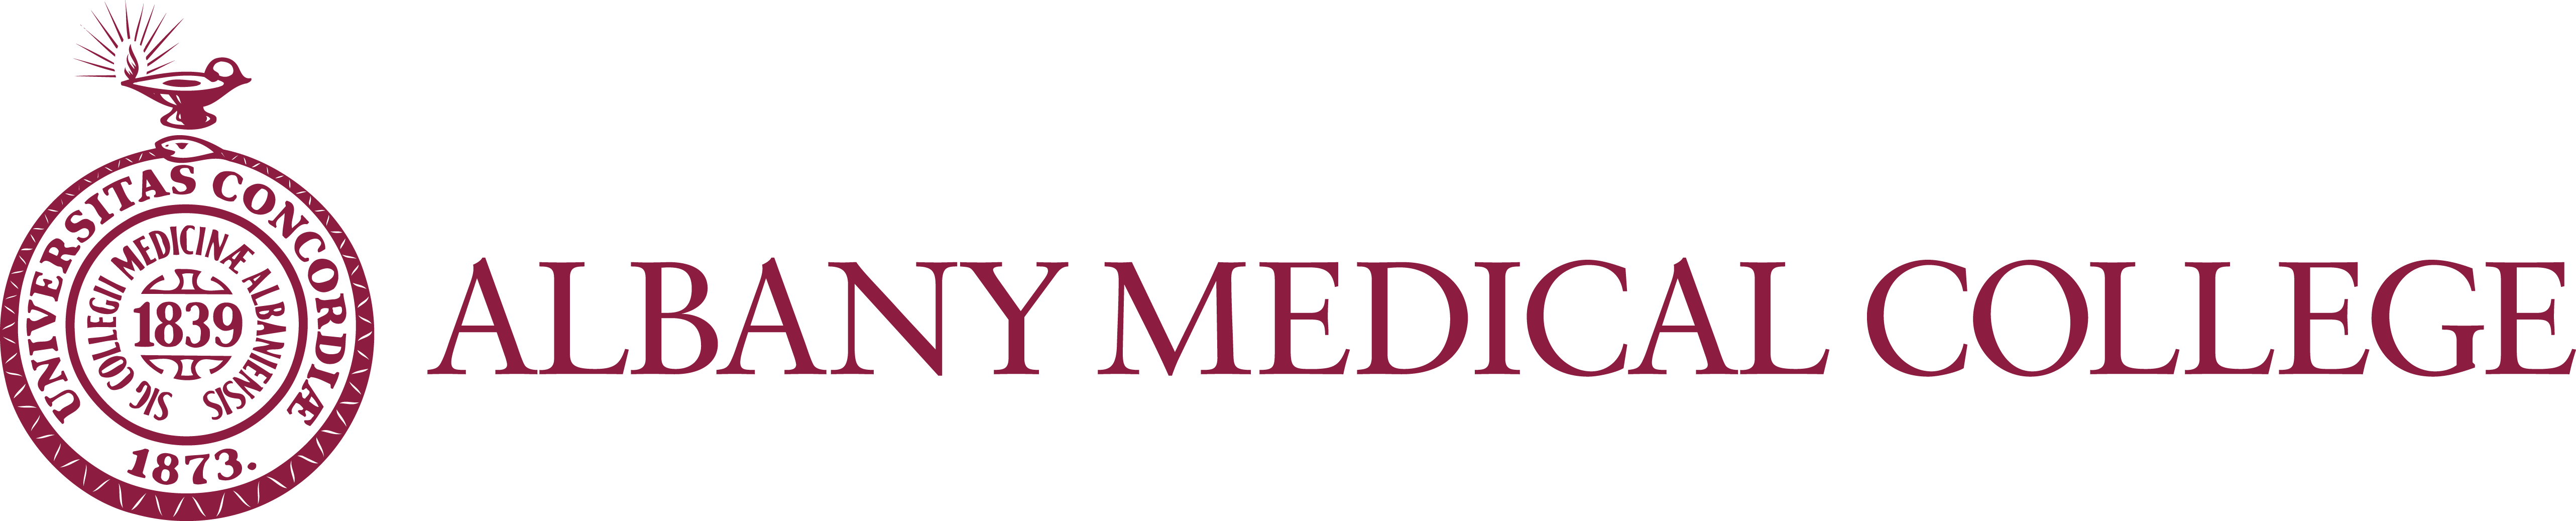 albany medical college logo